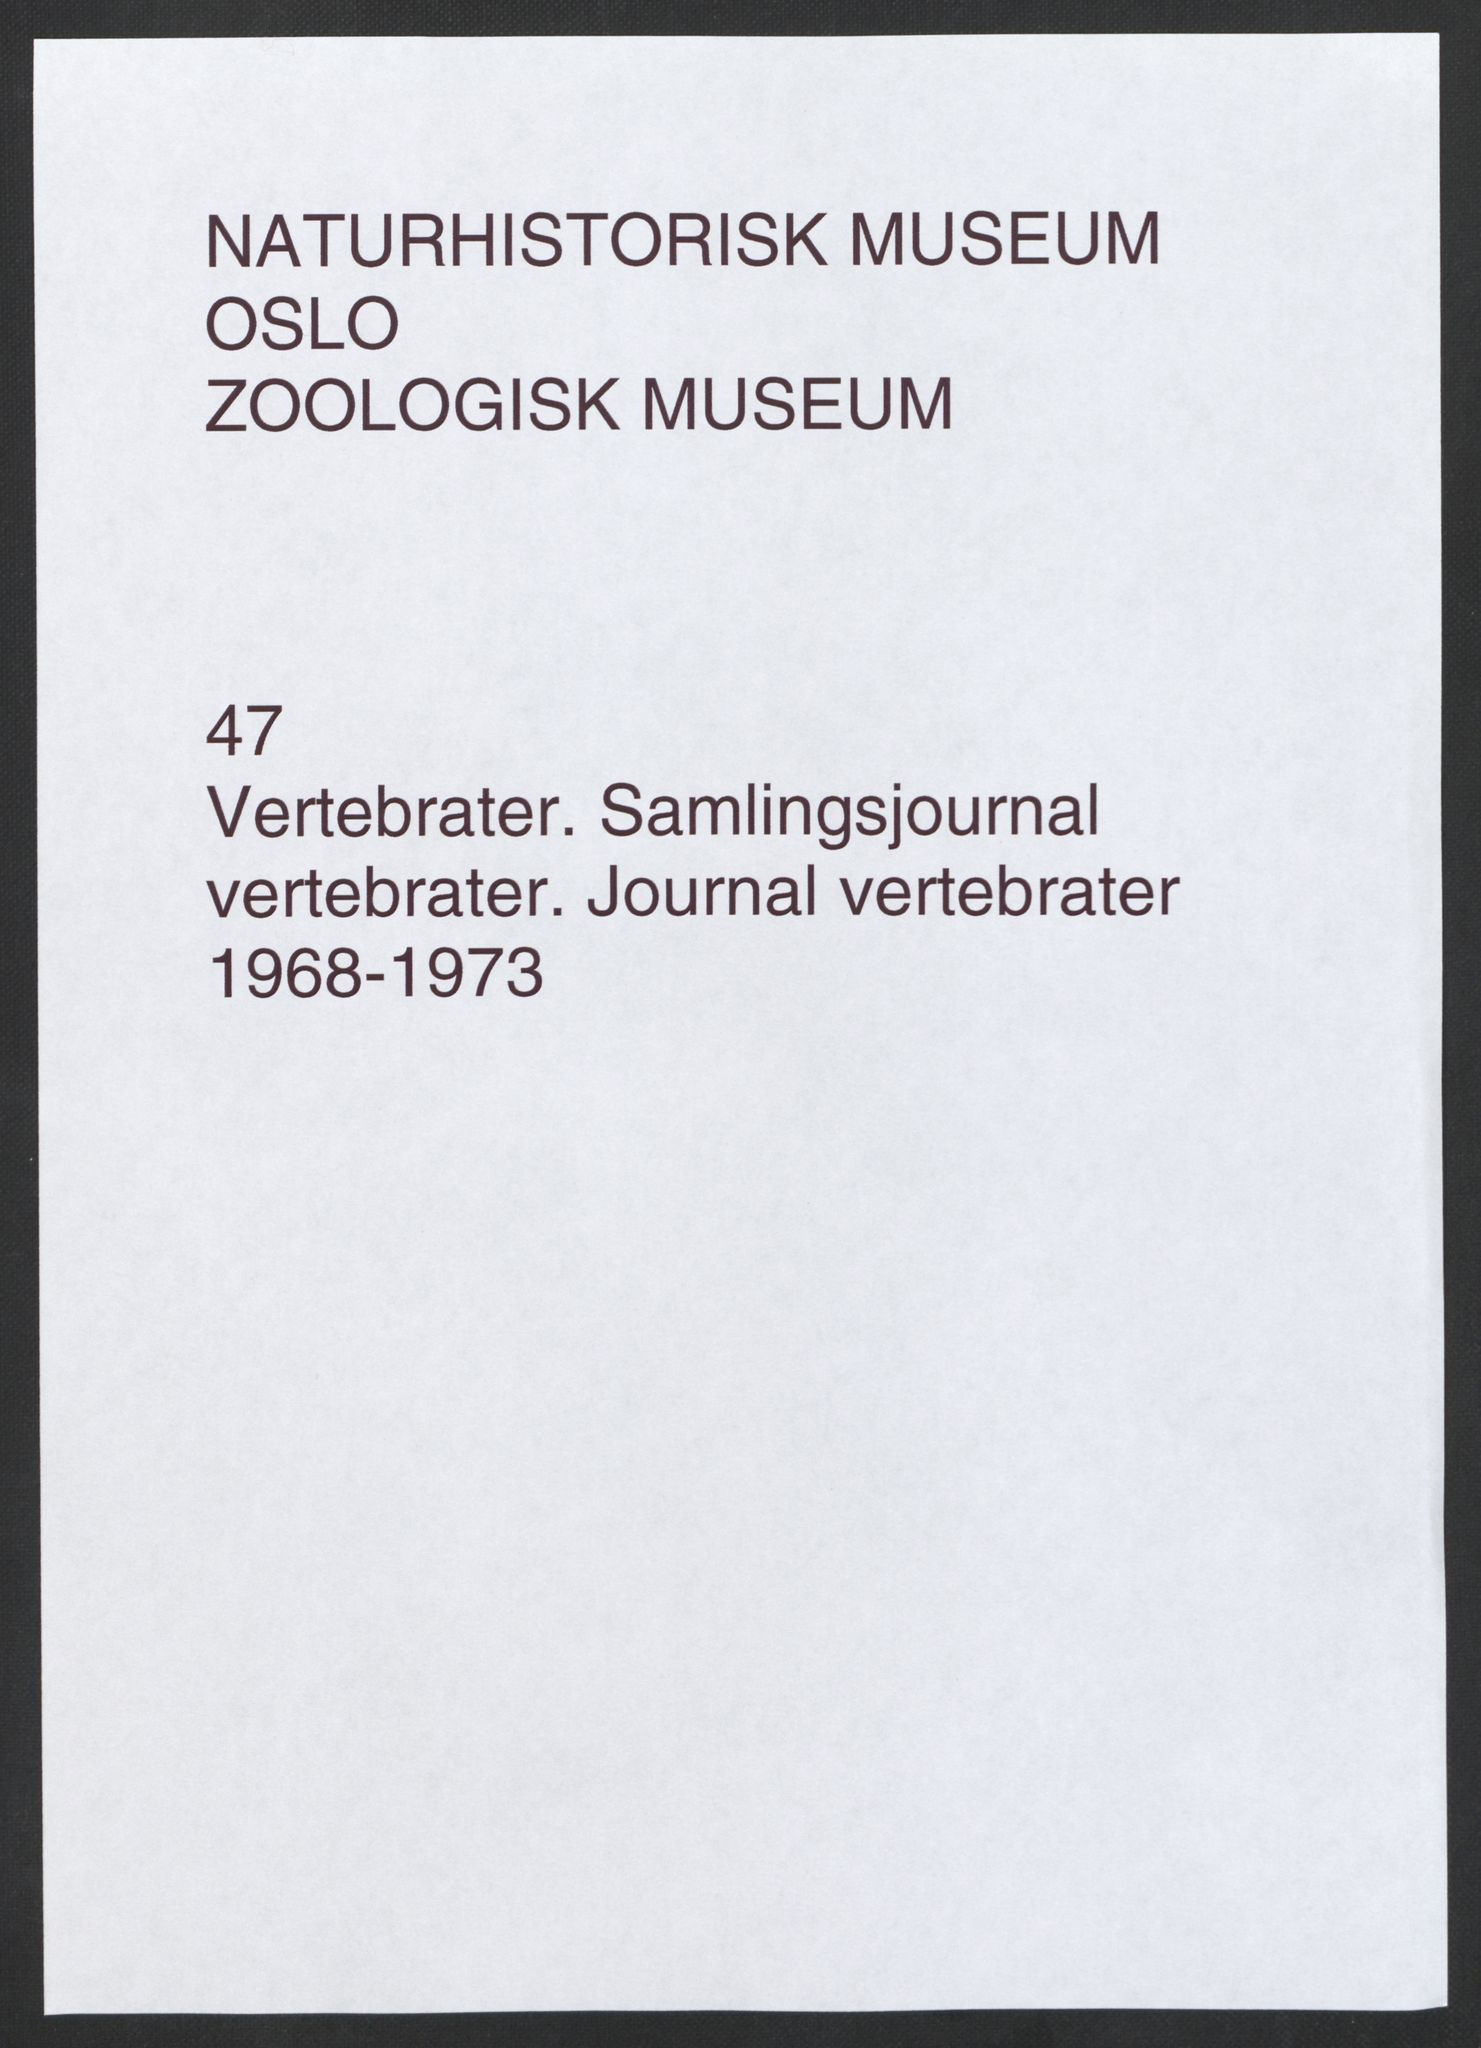 Naturhistorisk museum (Oslo), NHMO/-/5, 1968-1973